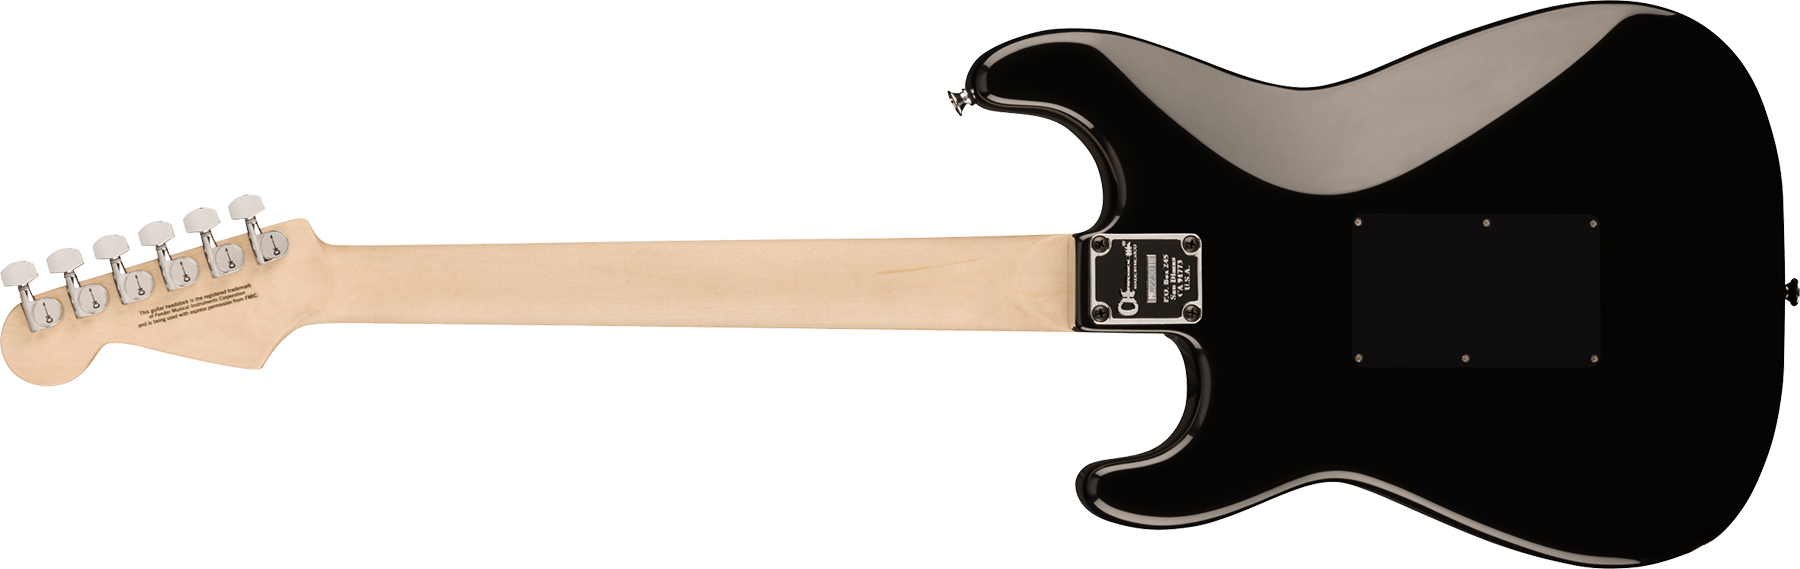 Charvel Pro-mod So-cal Style 1 Hh Fr M 2h Seymour Duncan Mn - Gloss Black - E-Gitarre in Str-Form - Variation 1